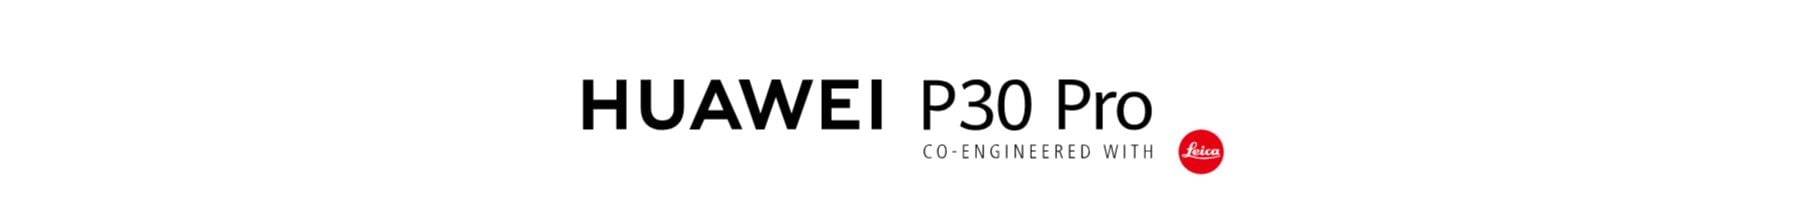 Huawei	P30 Pro